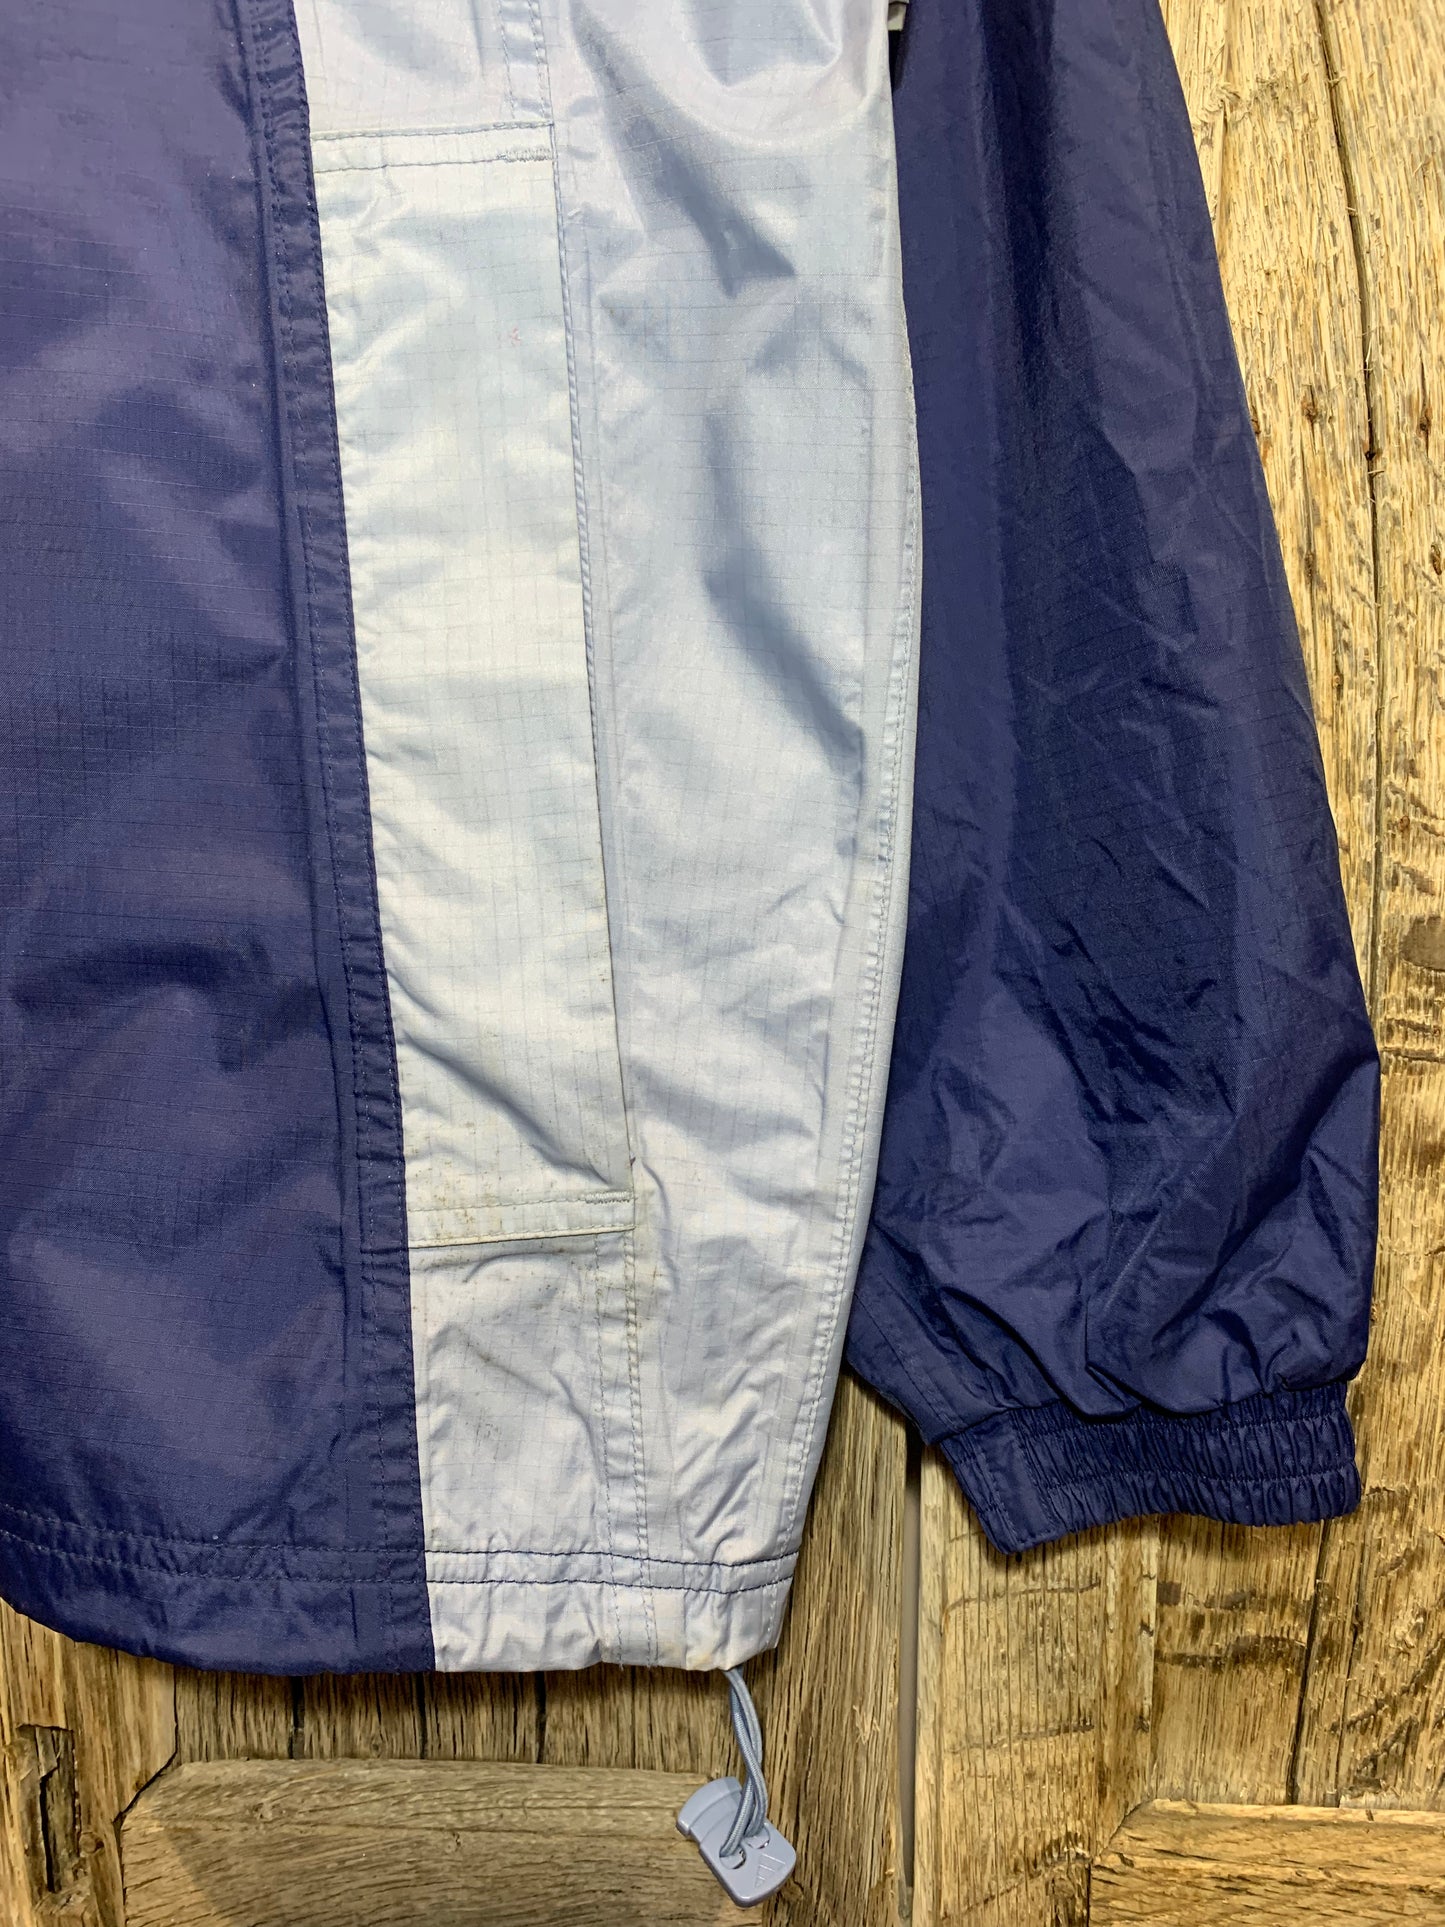 Vintage Adidas Blue 1/4 Zip Jacket